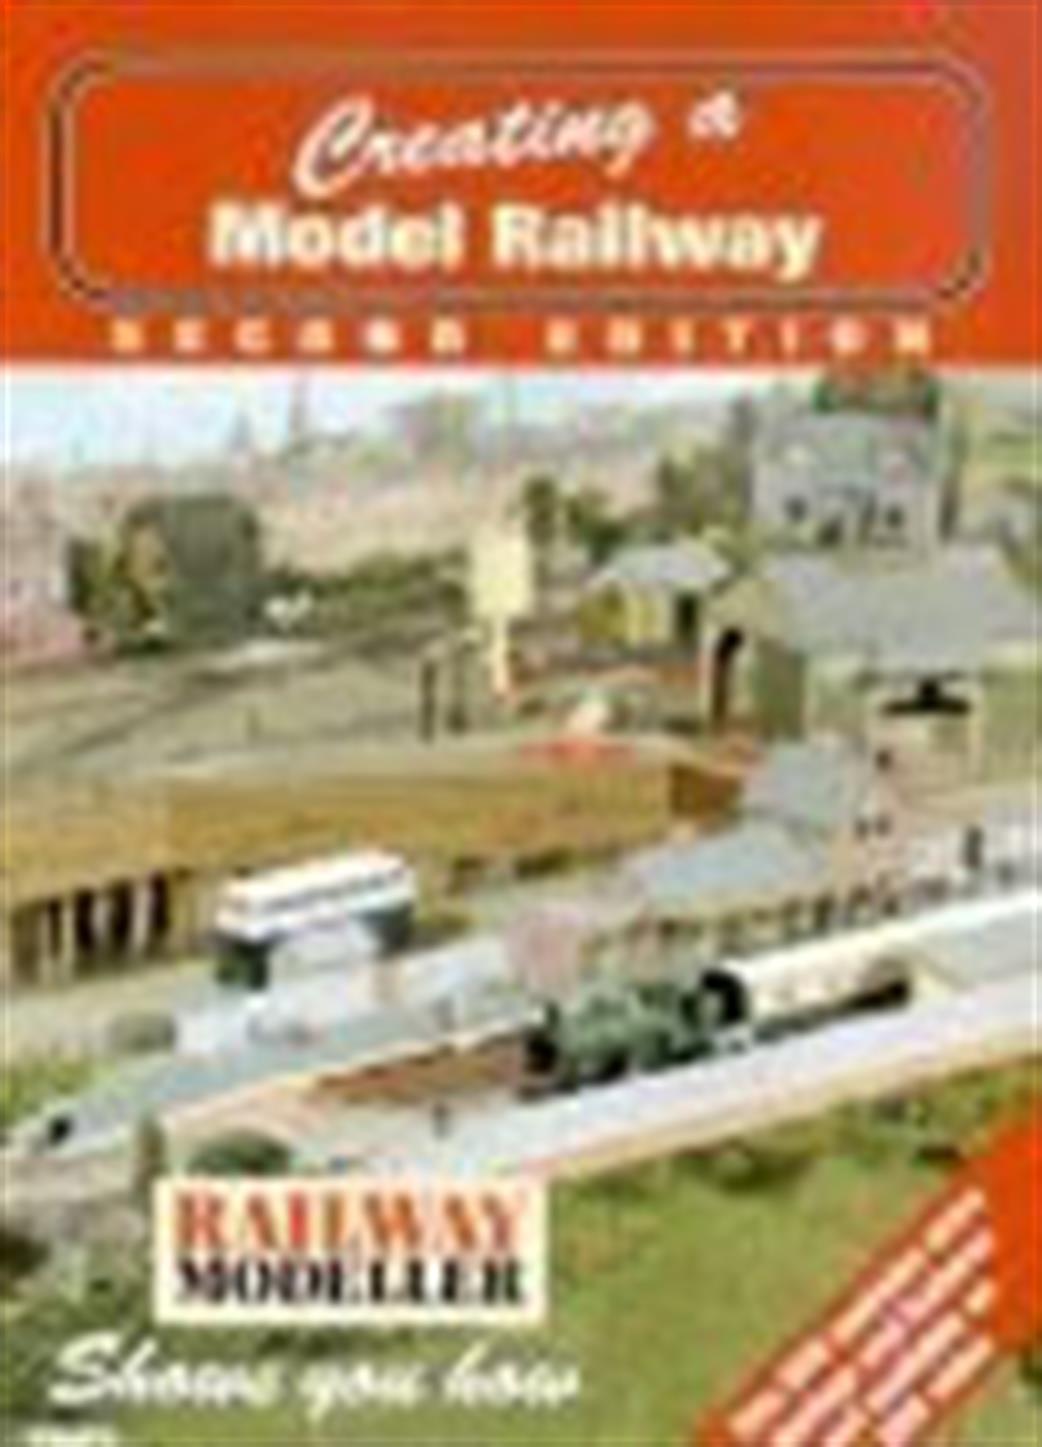 Peco  DVD1 Creating A Model Railway (DVD)